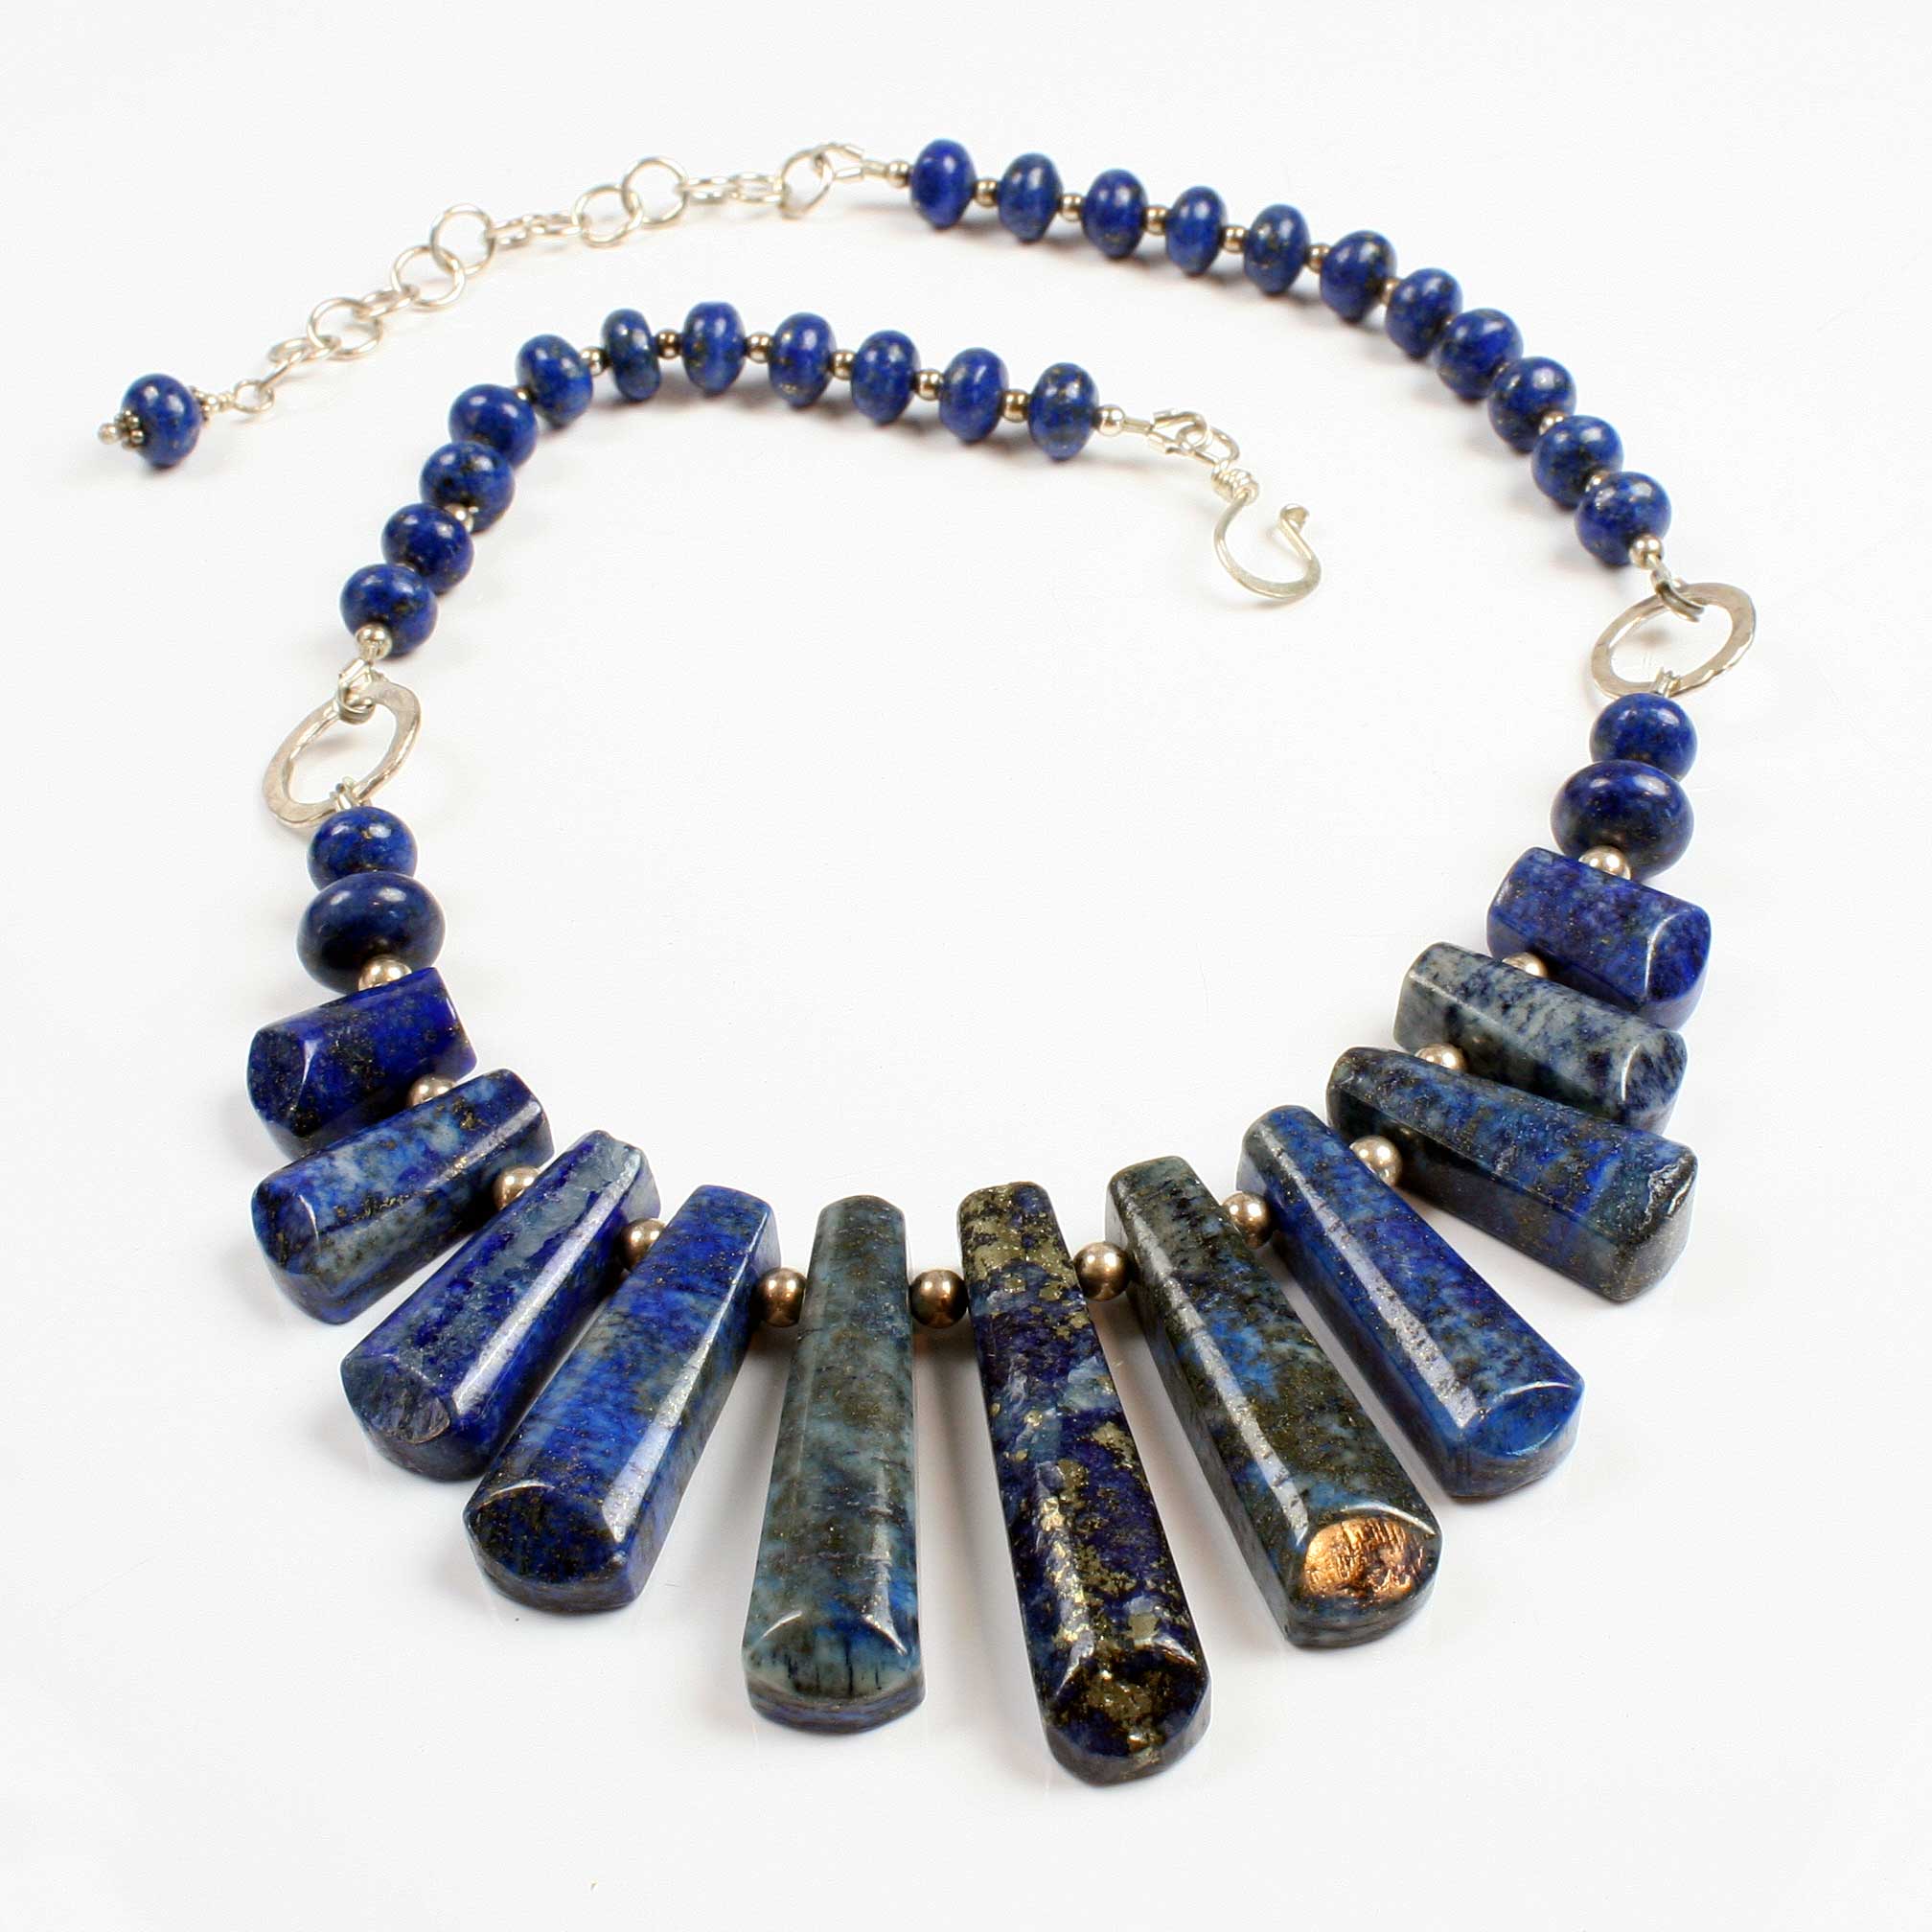 Polished Lapis Lazuli Necklace / Choker, Sterling Silver